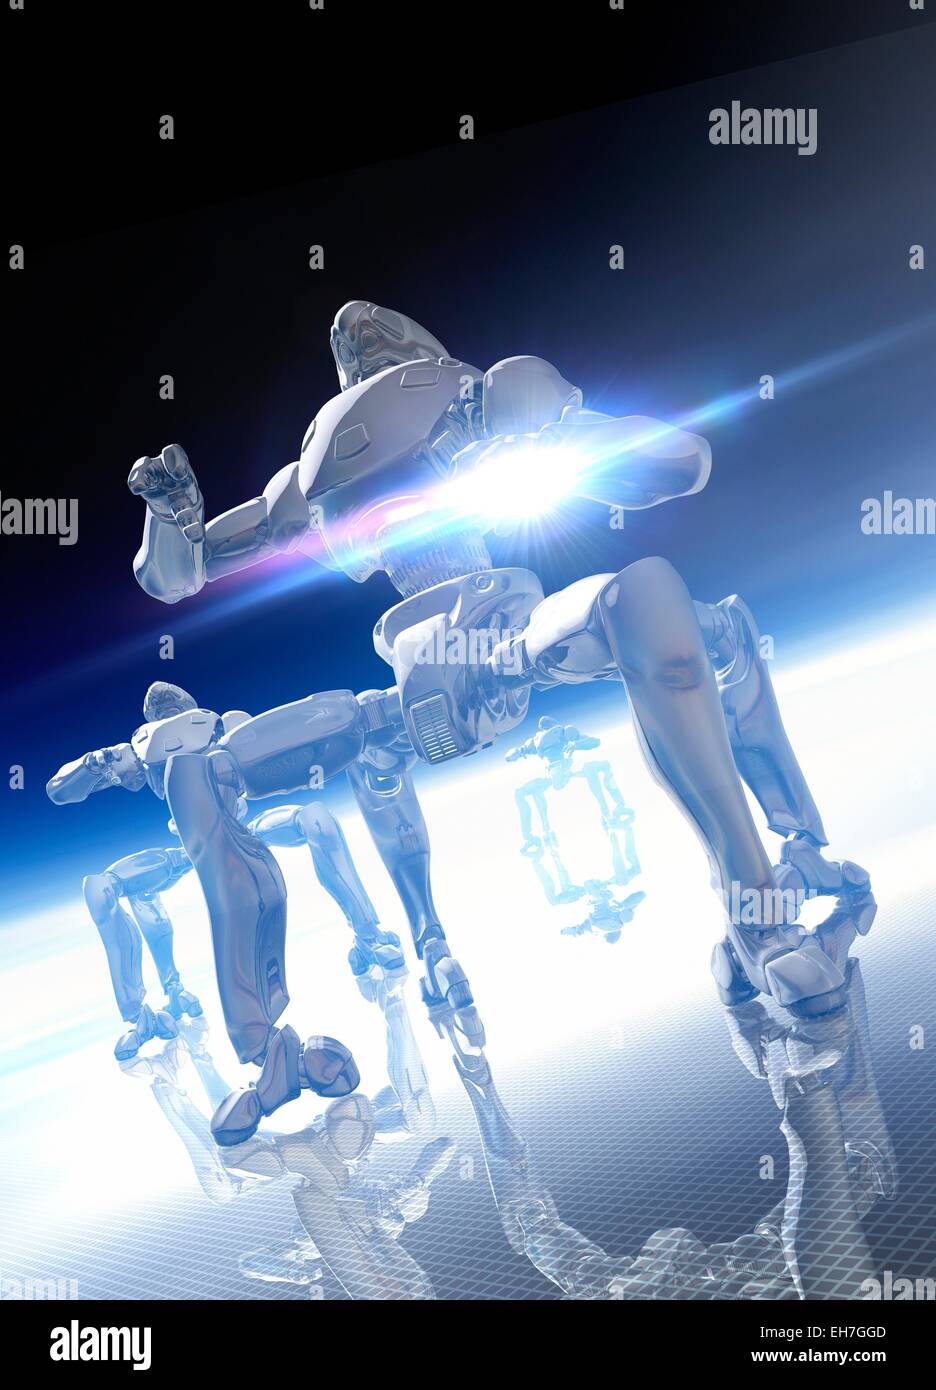 Space robots, artwork Stock Photo